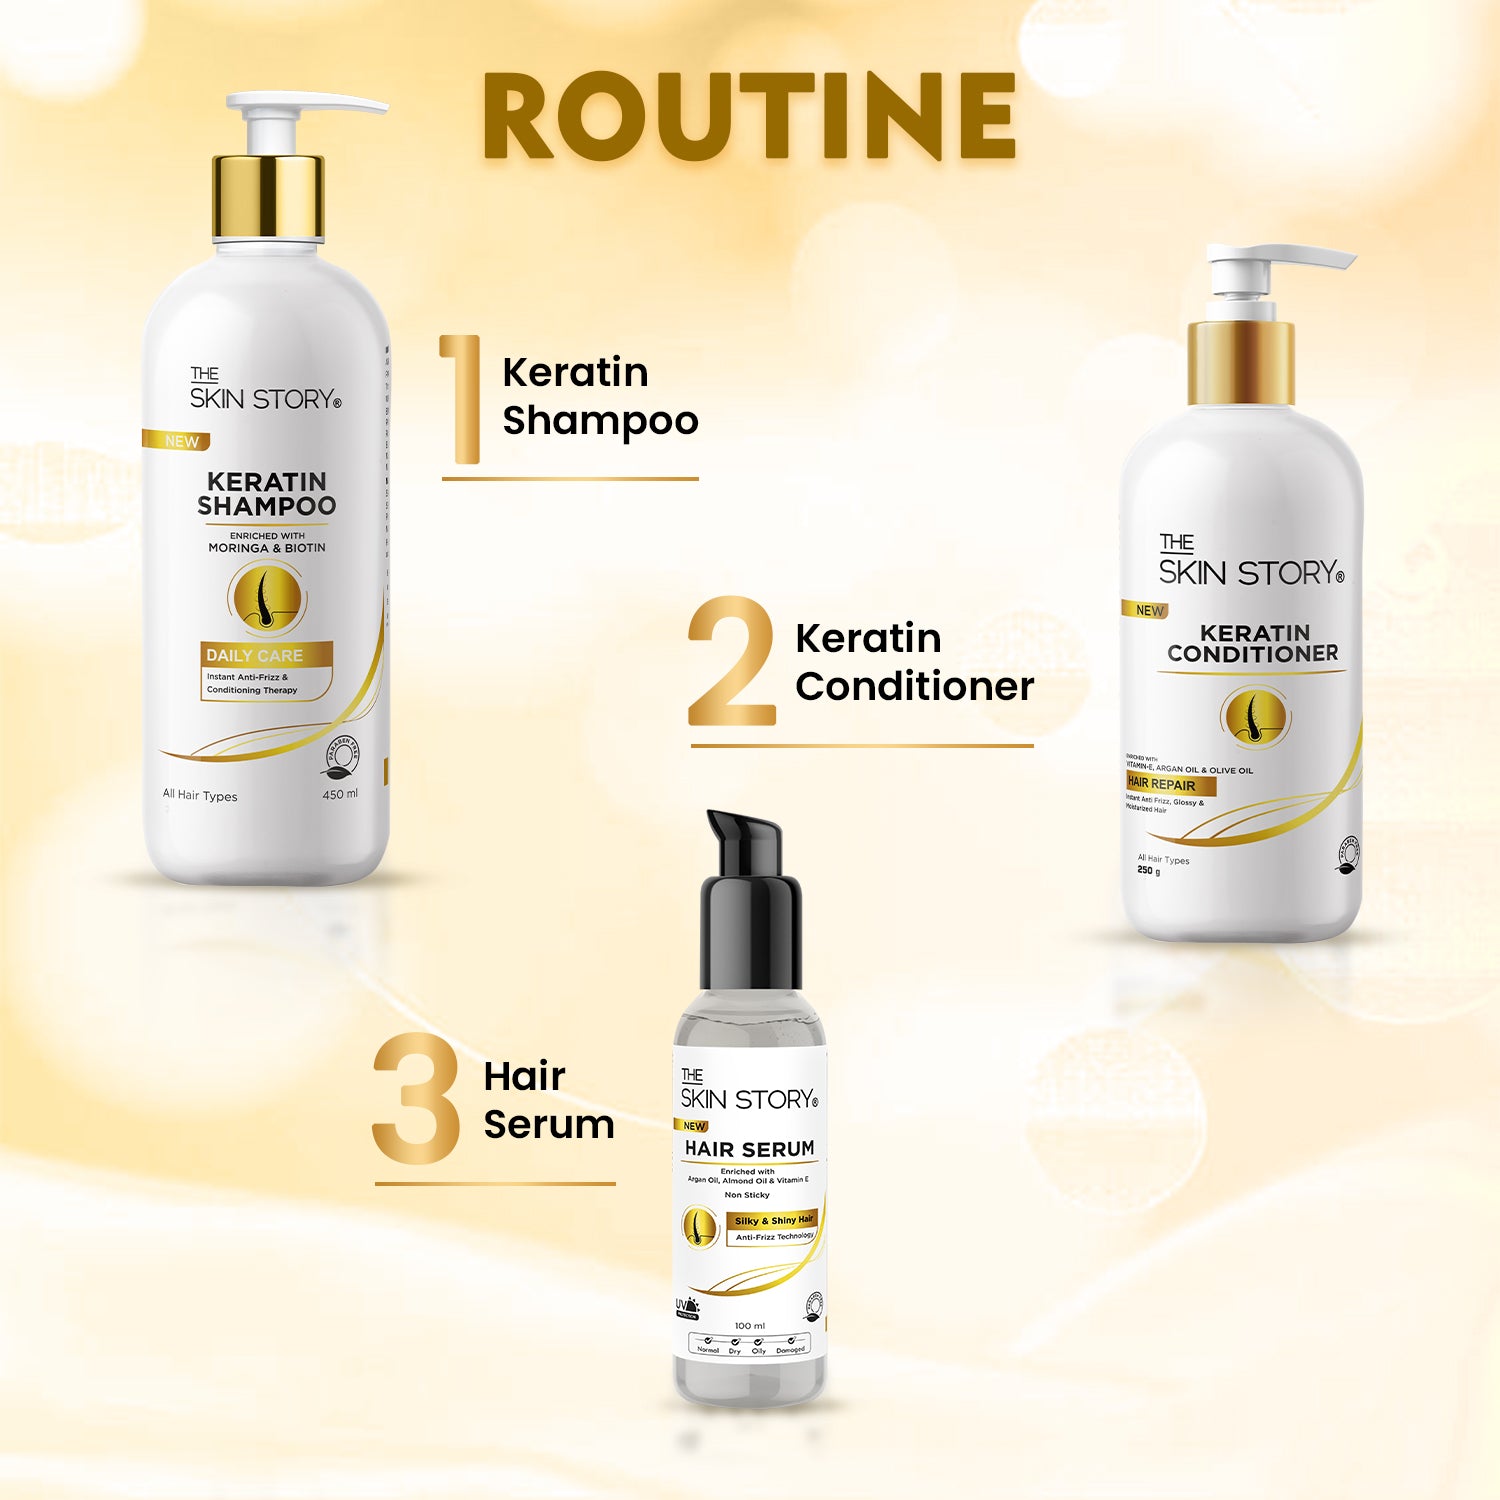 Keratin &amp; Biotin Shampoo | Soft &amp; Frizz Free Hair | Daily Care &amp; Anti-Hairfall | All Hair Types | 450ml